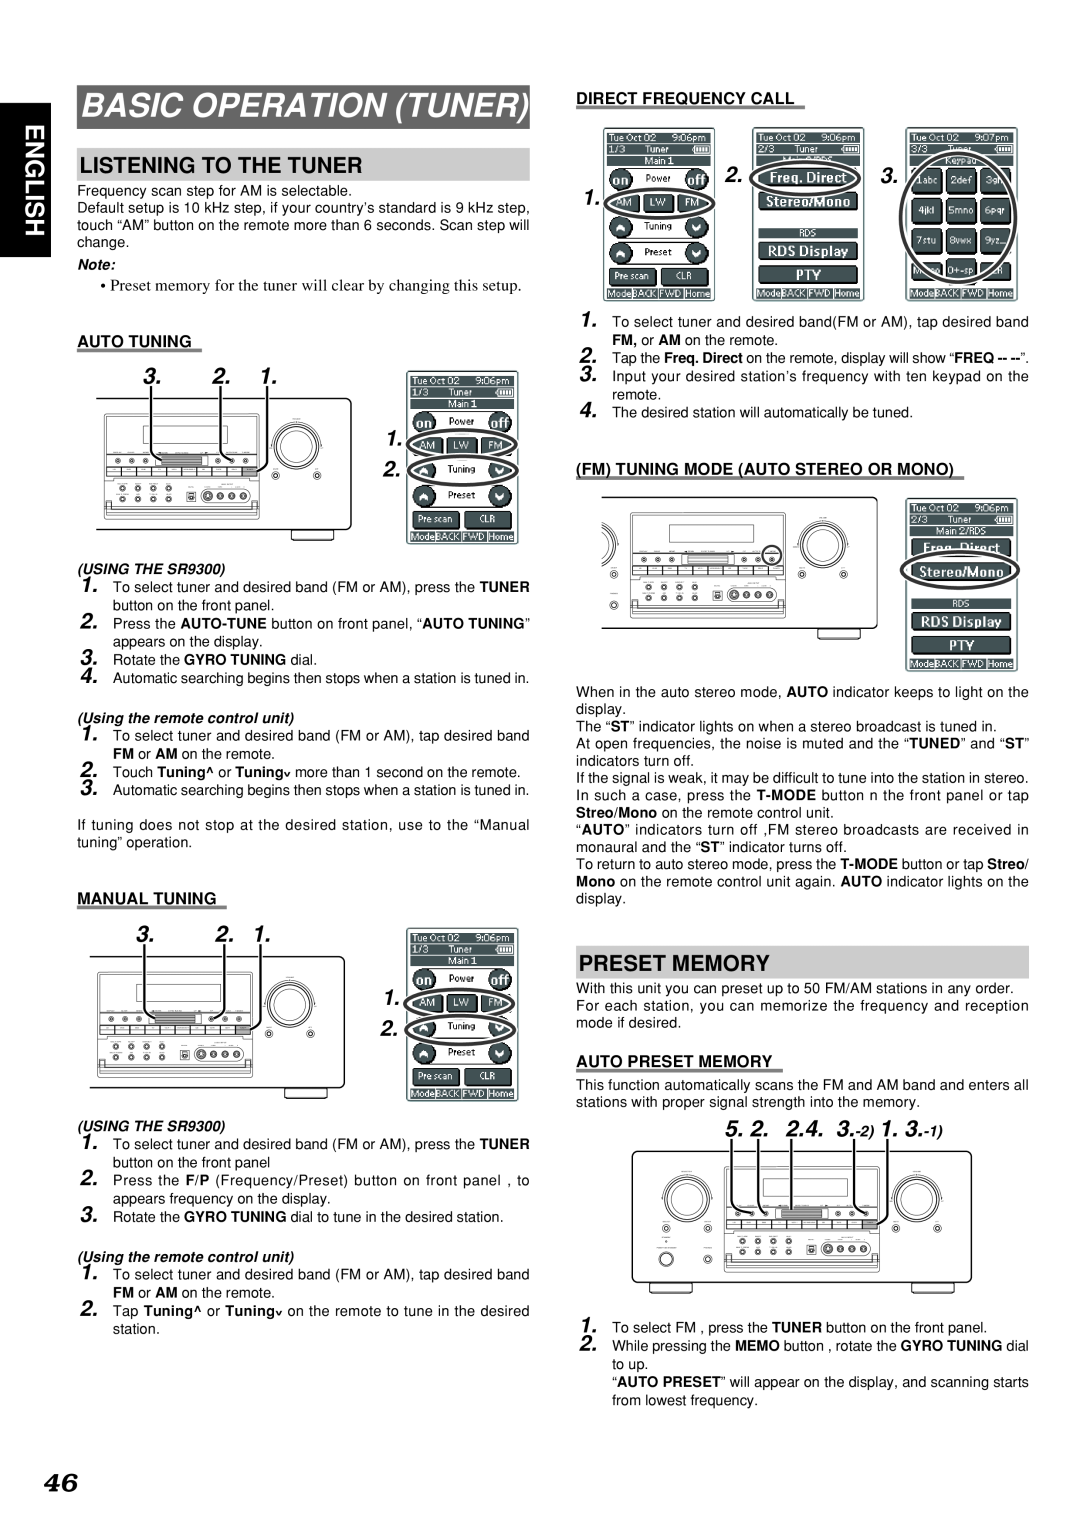 Marantz SR9300 manual Basic Operation Tuner, 3.2, 5. 2. 2.4. 3.-2 1, Direct Frequency Call, Auto Tuning, Manual Tuning 